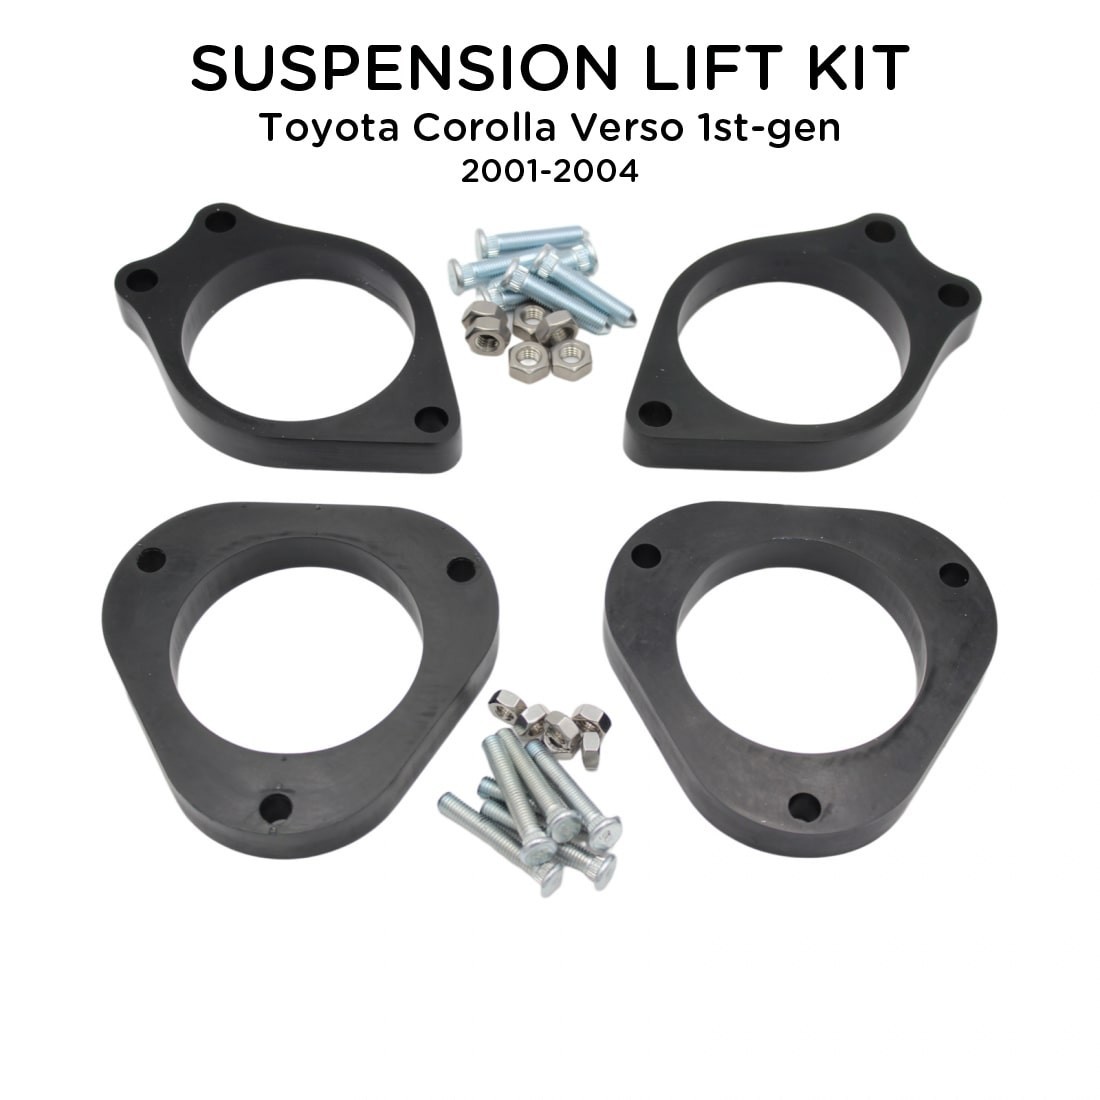 Suspension Lift Kit For Toyota Corolla Verso 2001-2004